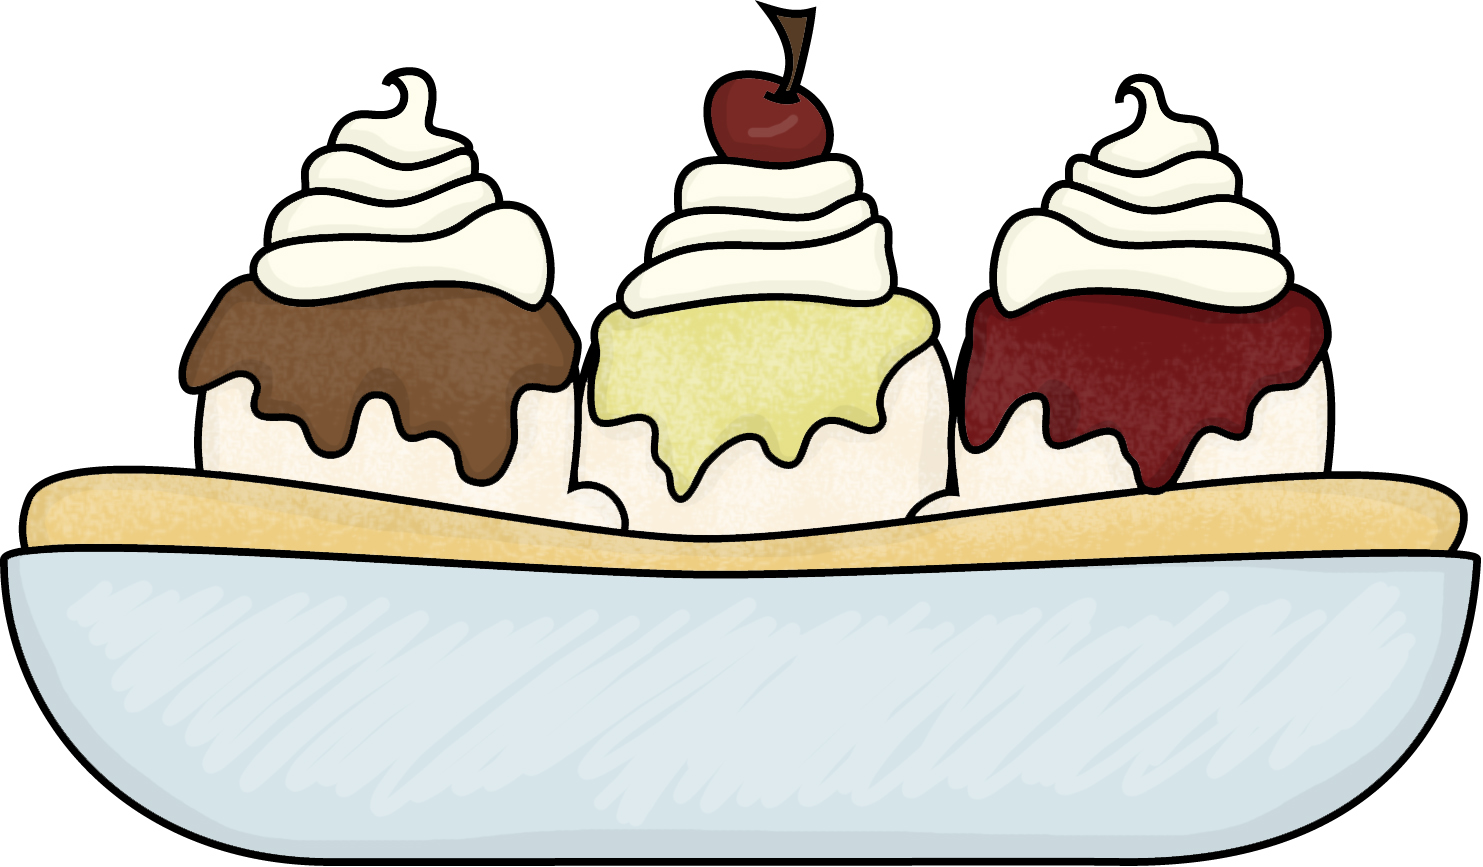 free ice cream sundae clipart - photo #40